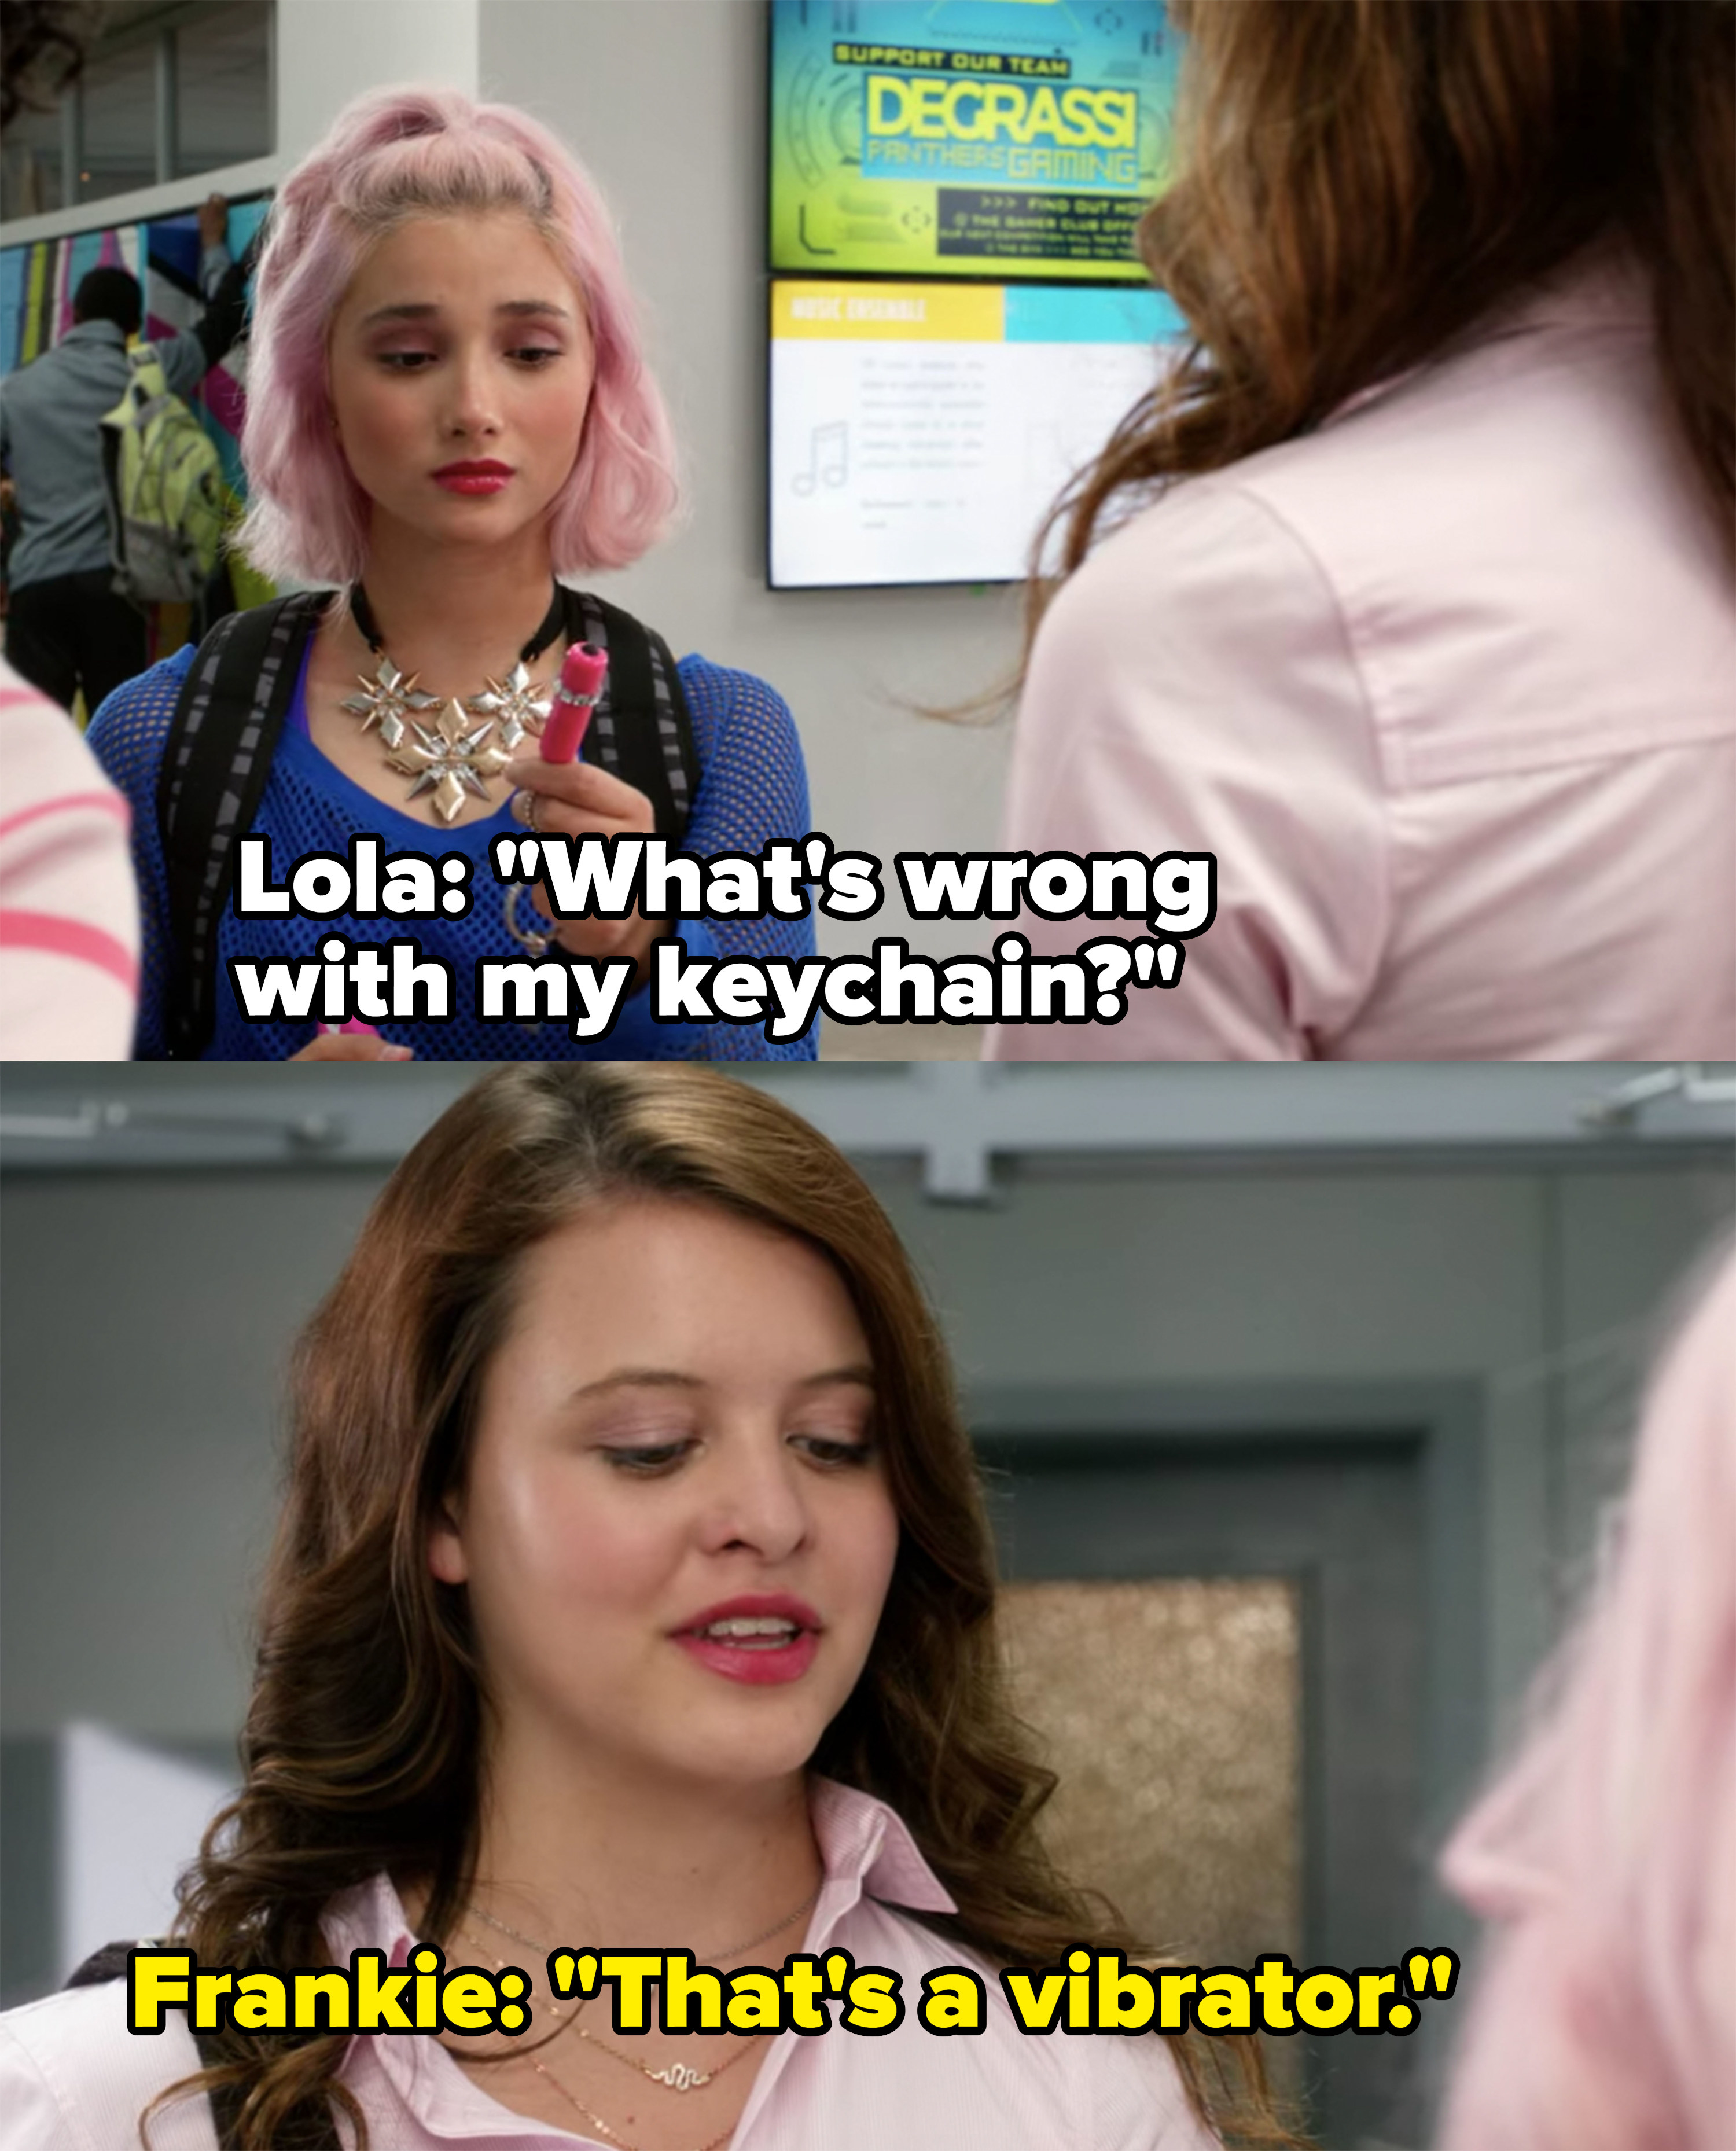 Lola mistakes a vibrator for a keychain